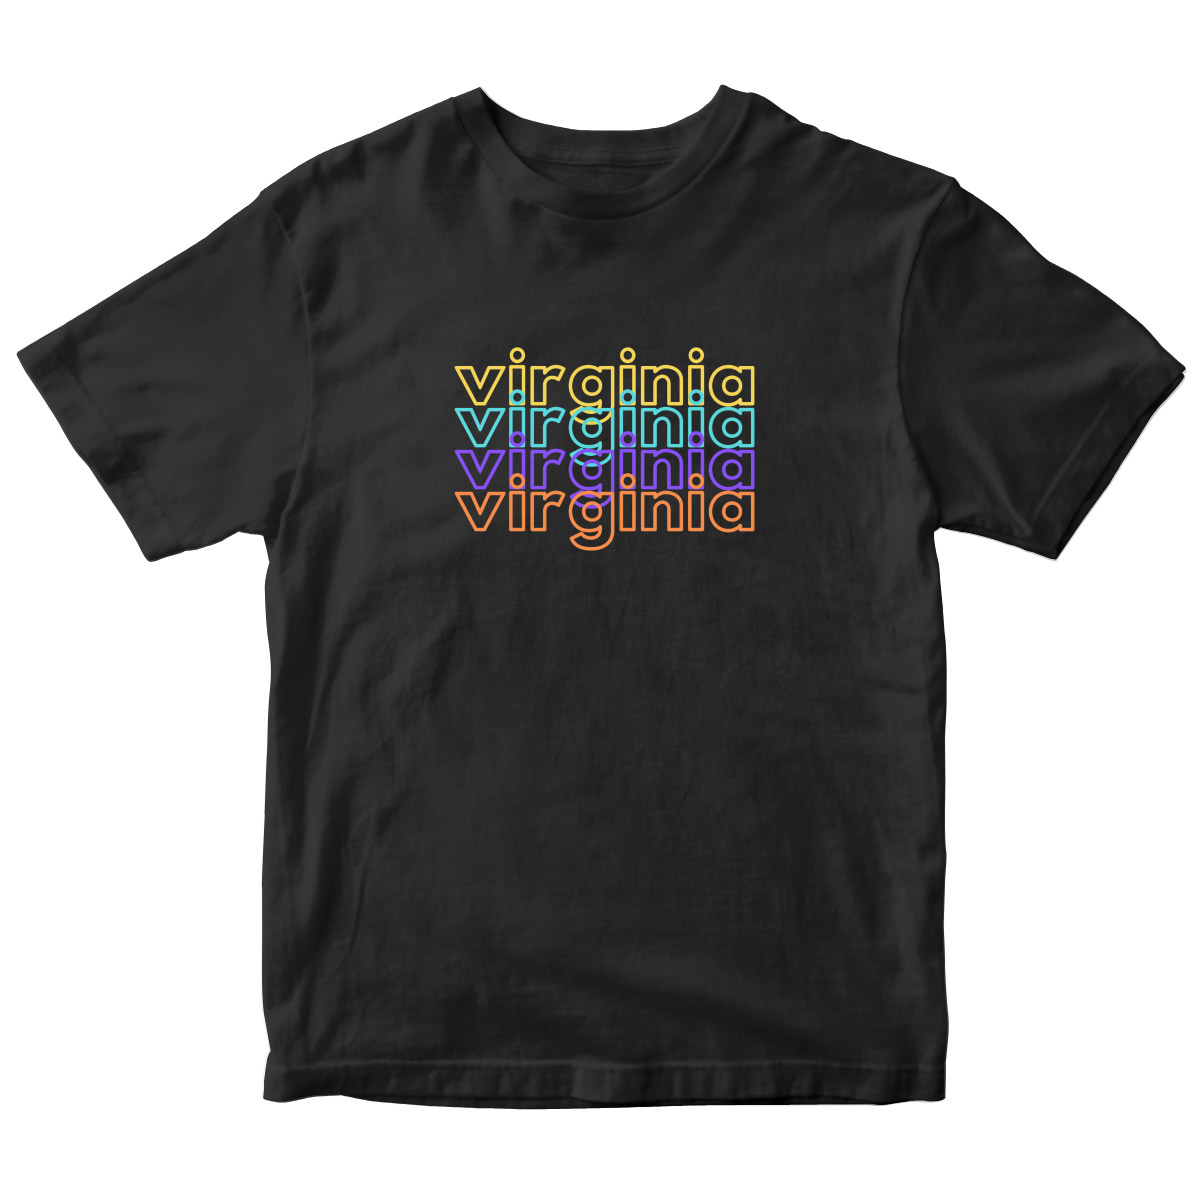 Virginia Kids T-shirt | Black